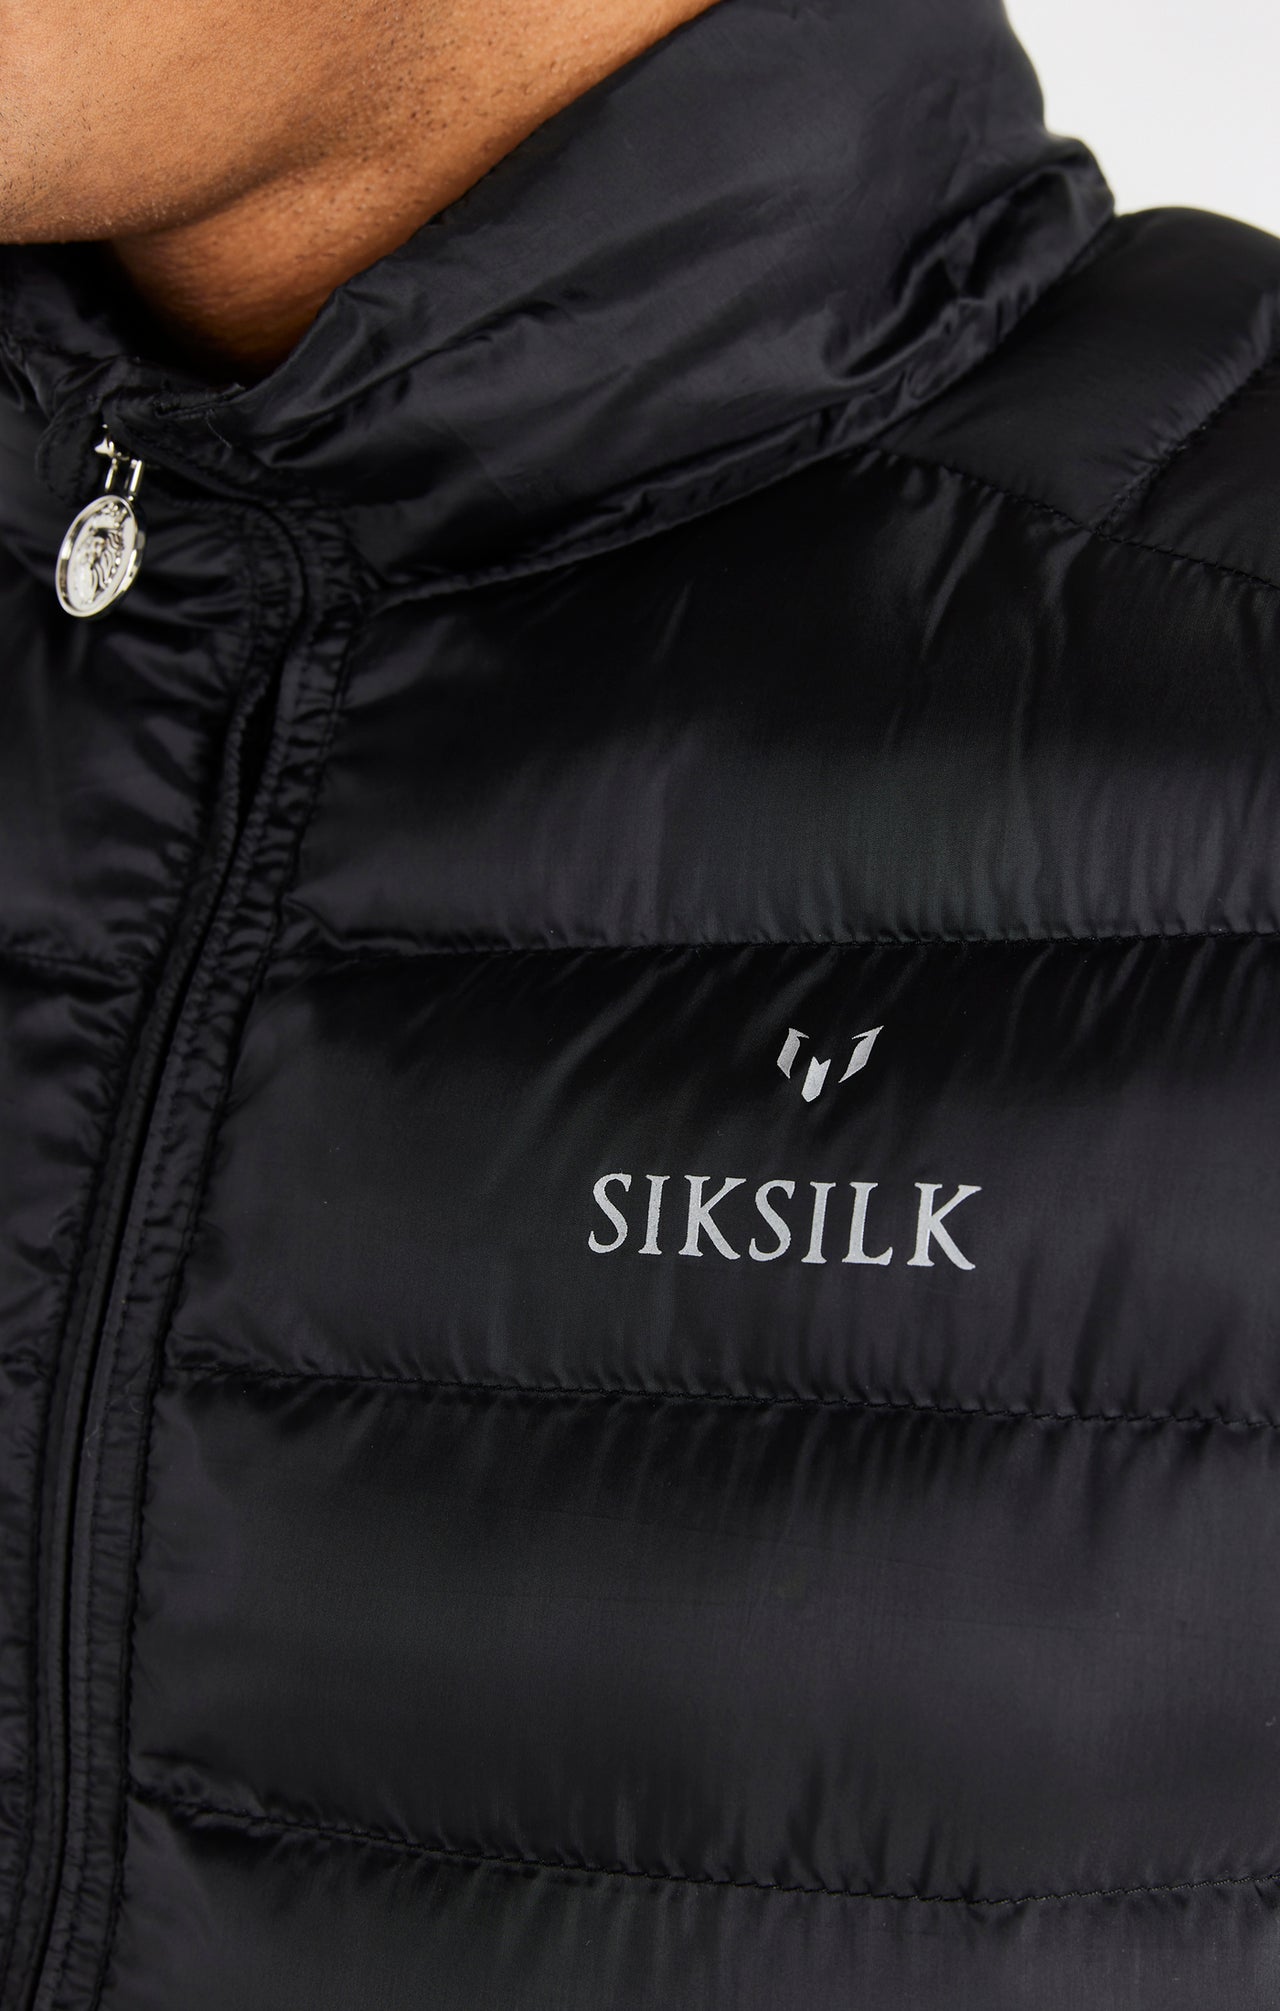 Messi x SikSilk Black Lightweight Bubble Jacket (3)